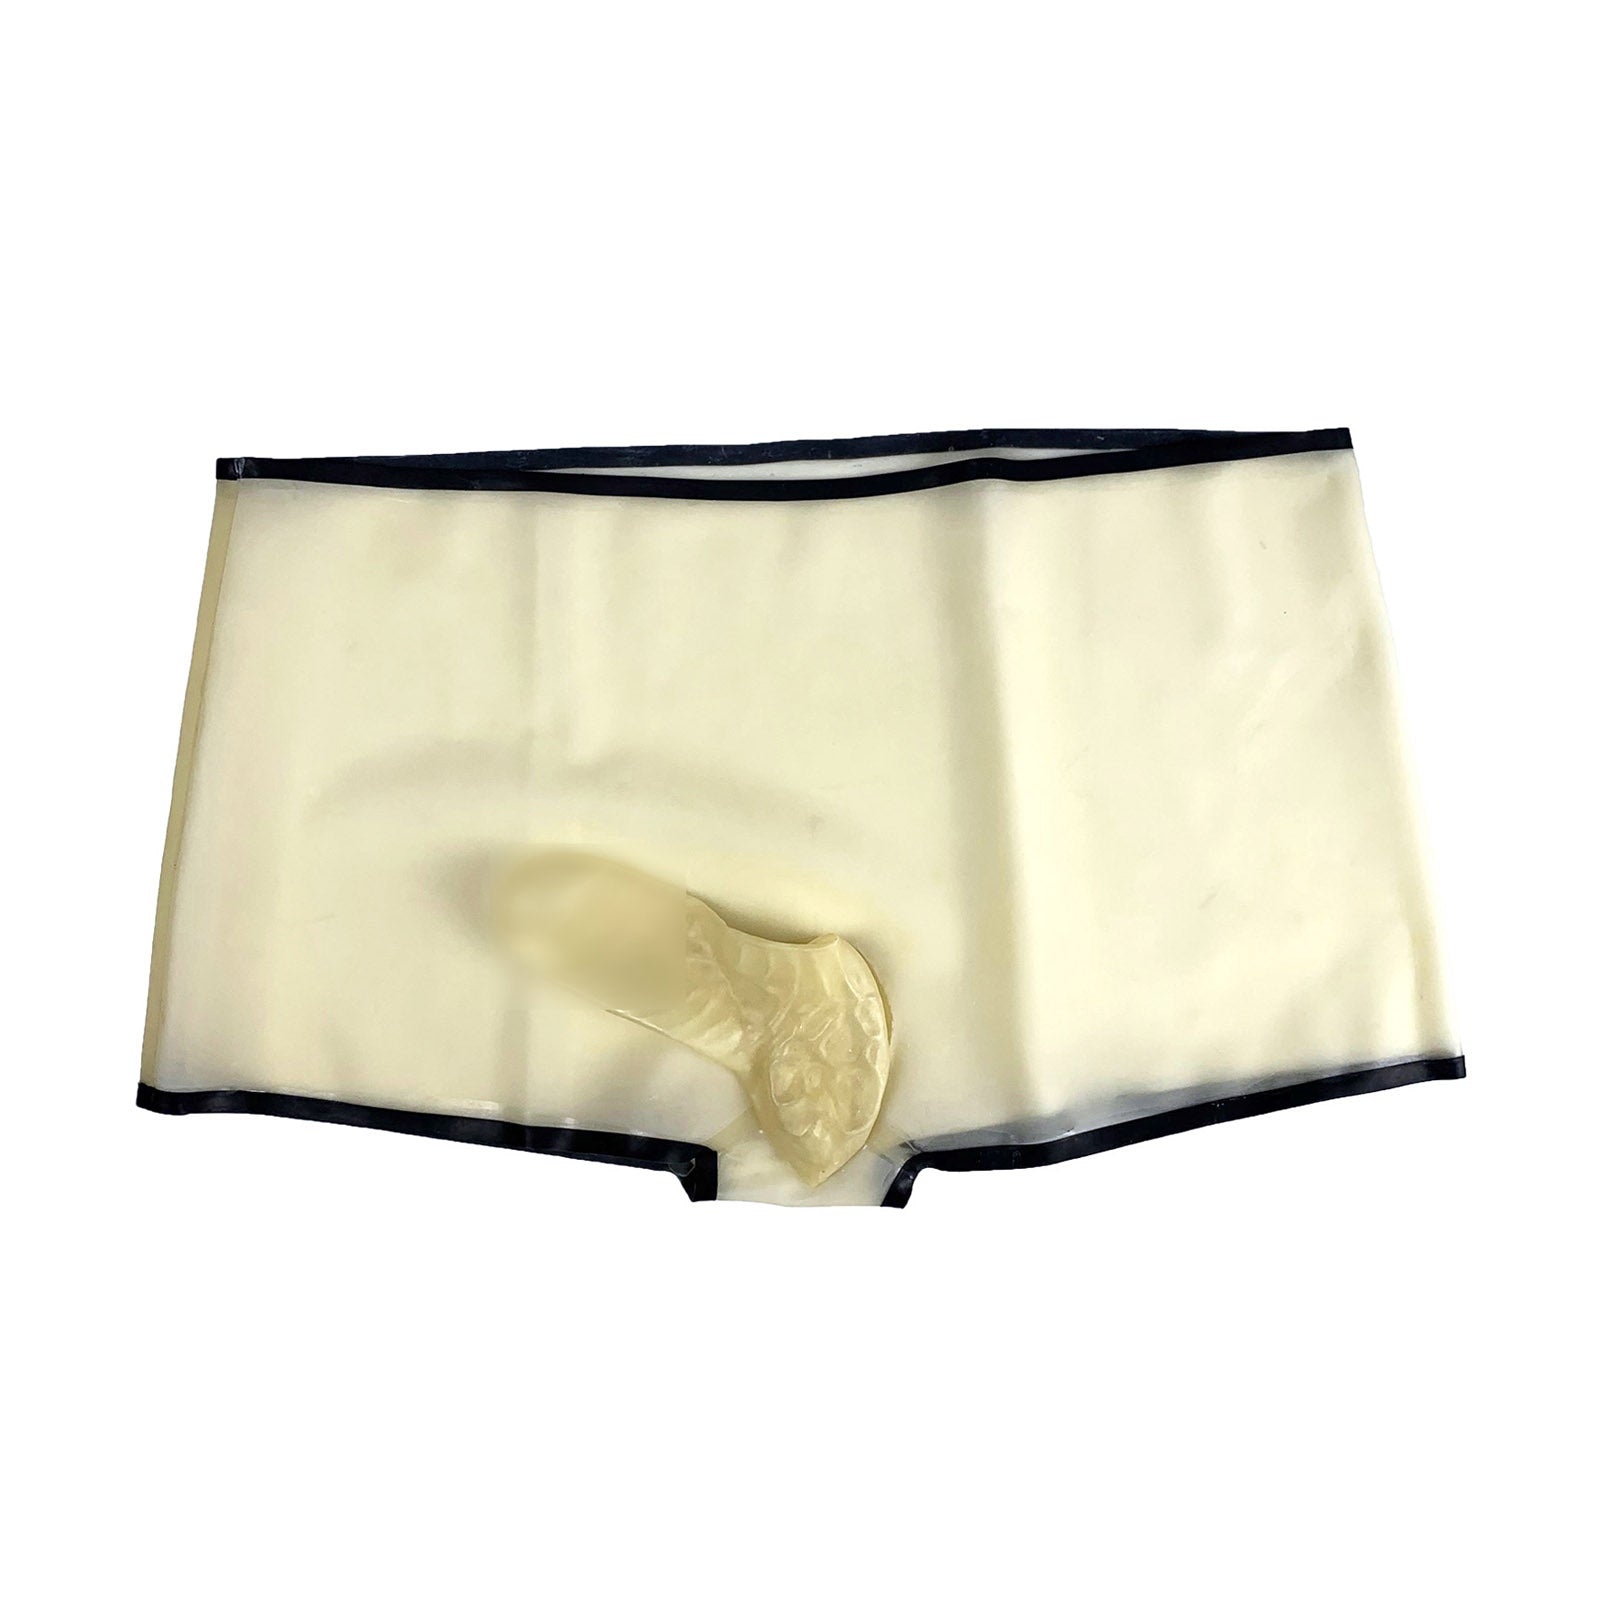 100% Natural Latex Men Briefs Rubber Male Shorts Underwear Panties